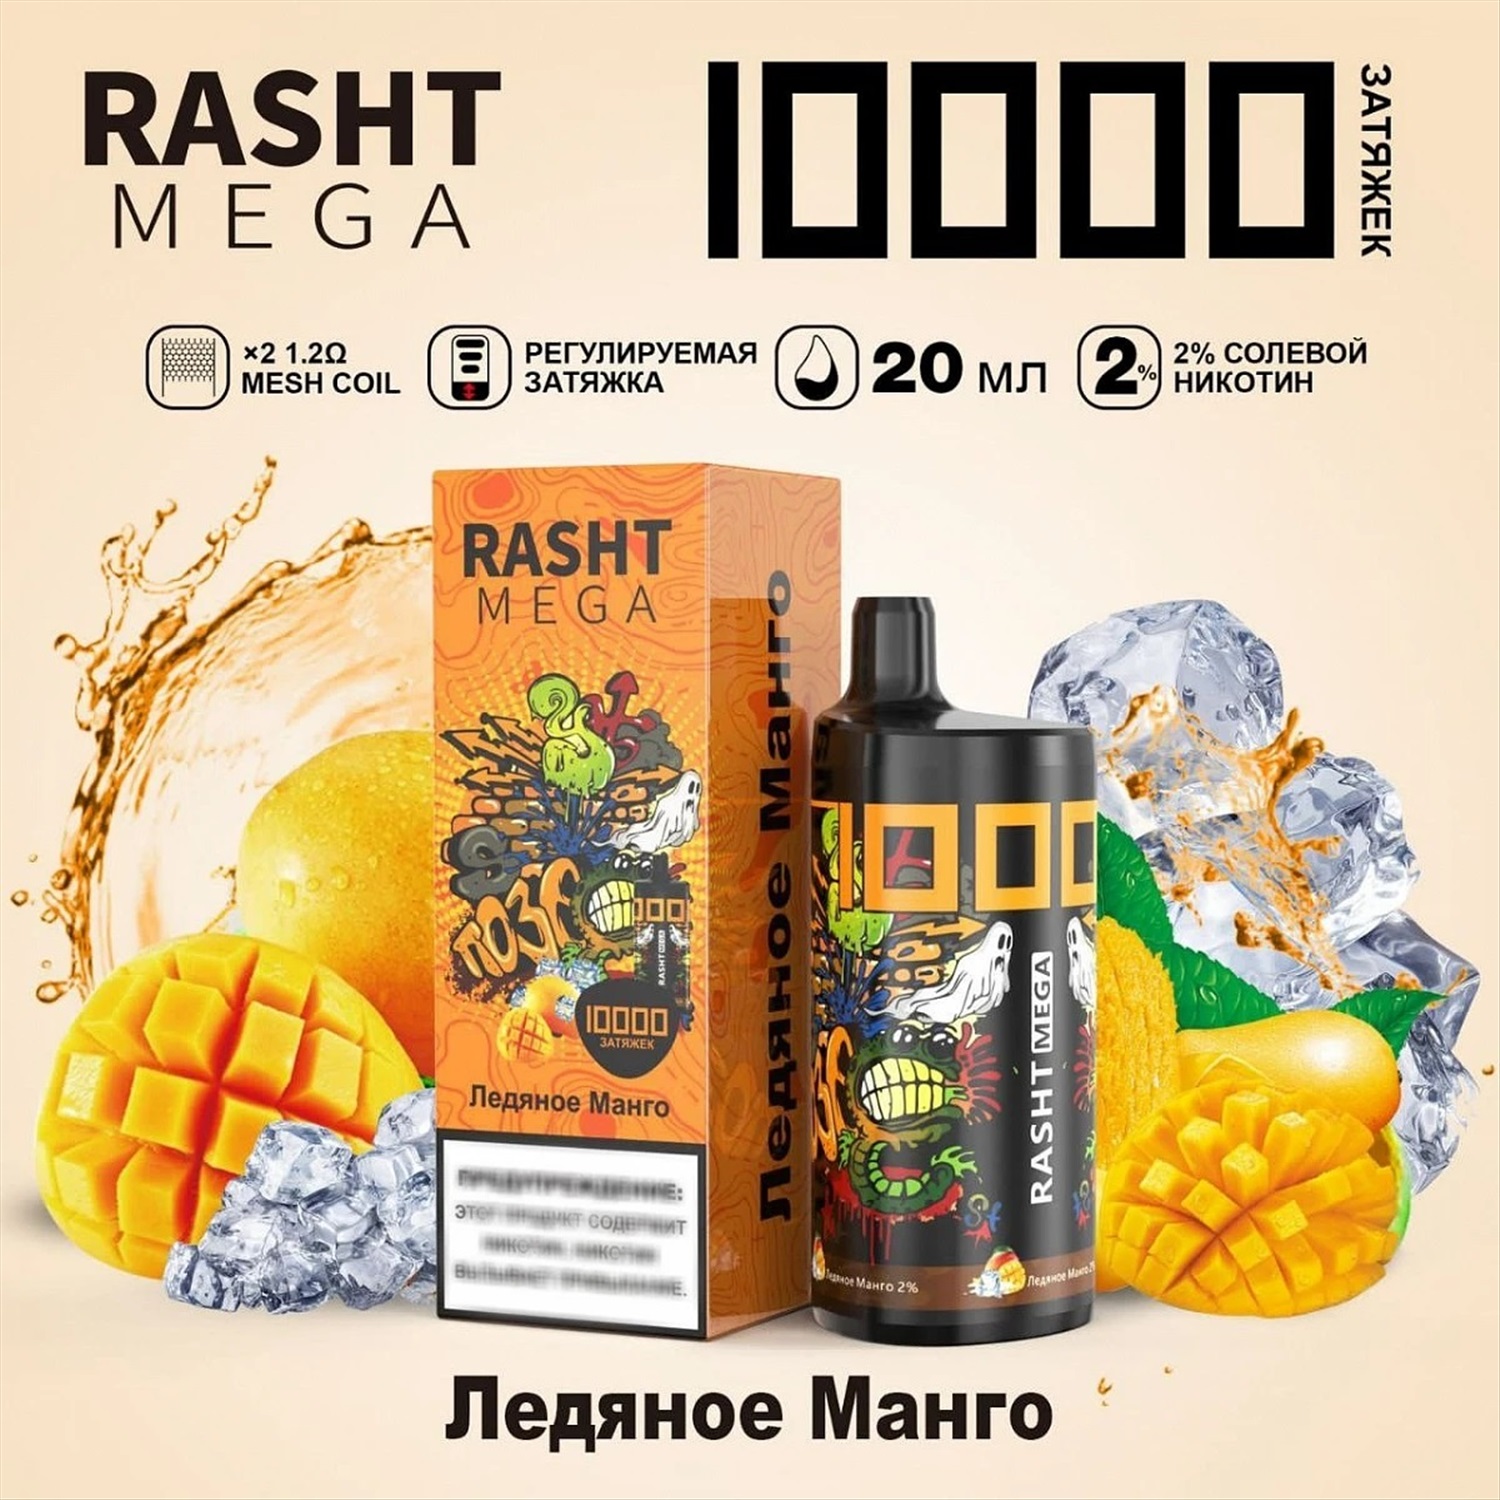 Aaok 10000. Электронная сигарета Rasht Mega 10000. Rasht Mega 10000 затяжек. Рашт мега 10000. Электронные сигареты 10000 затяжек манго.